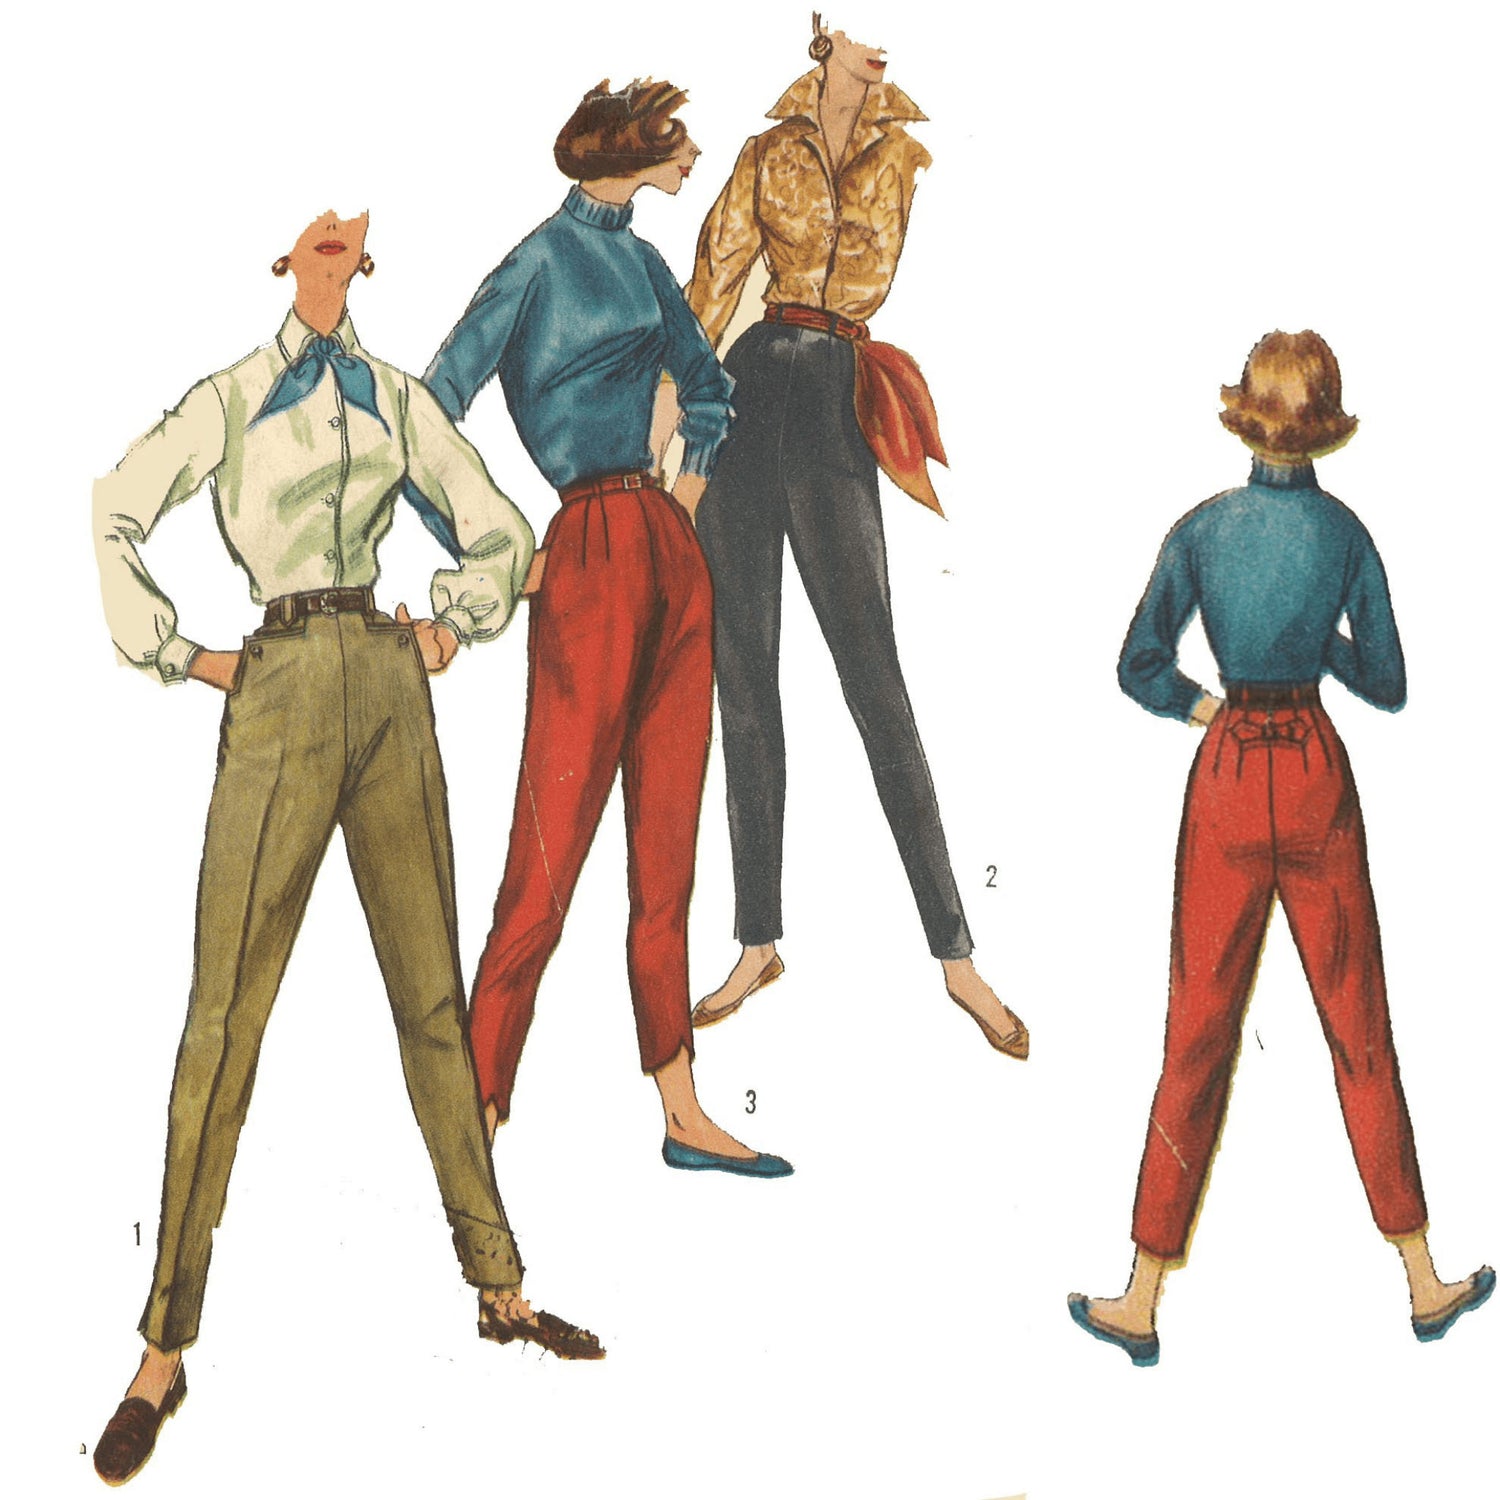 Pantsuit: The Elegant Fashion Style For Women From the 1940s | Pantsuit,  Elegant fashion, Pantsuits for women